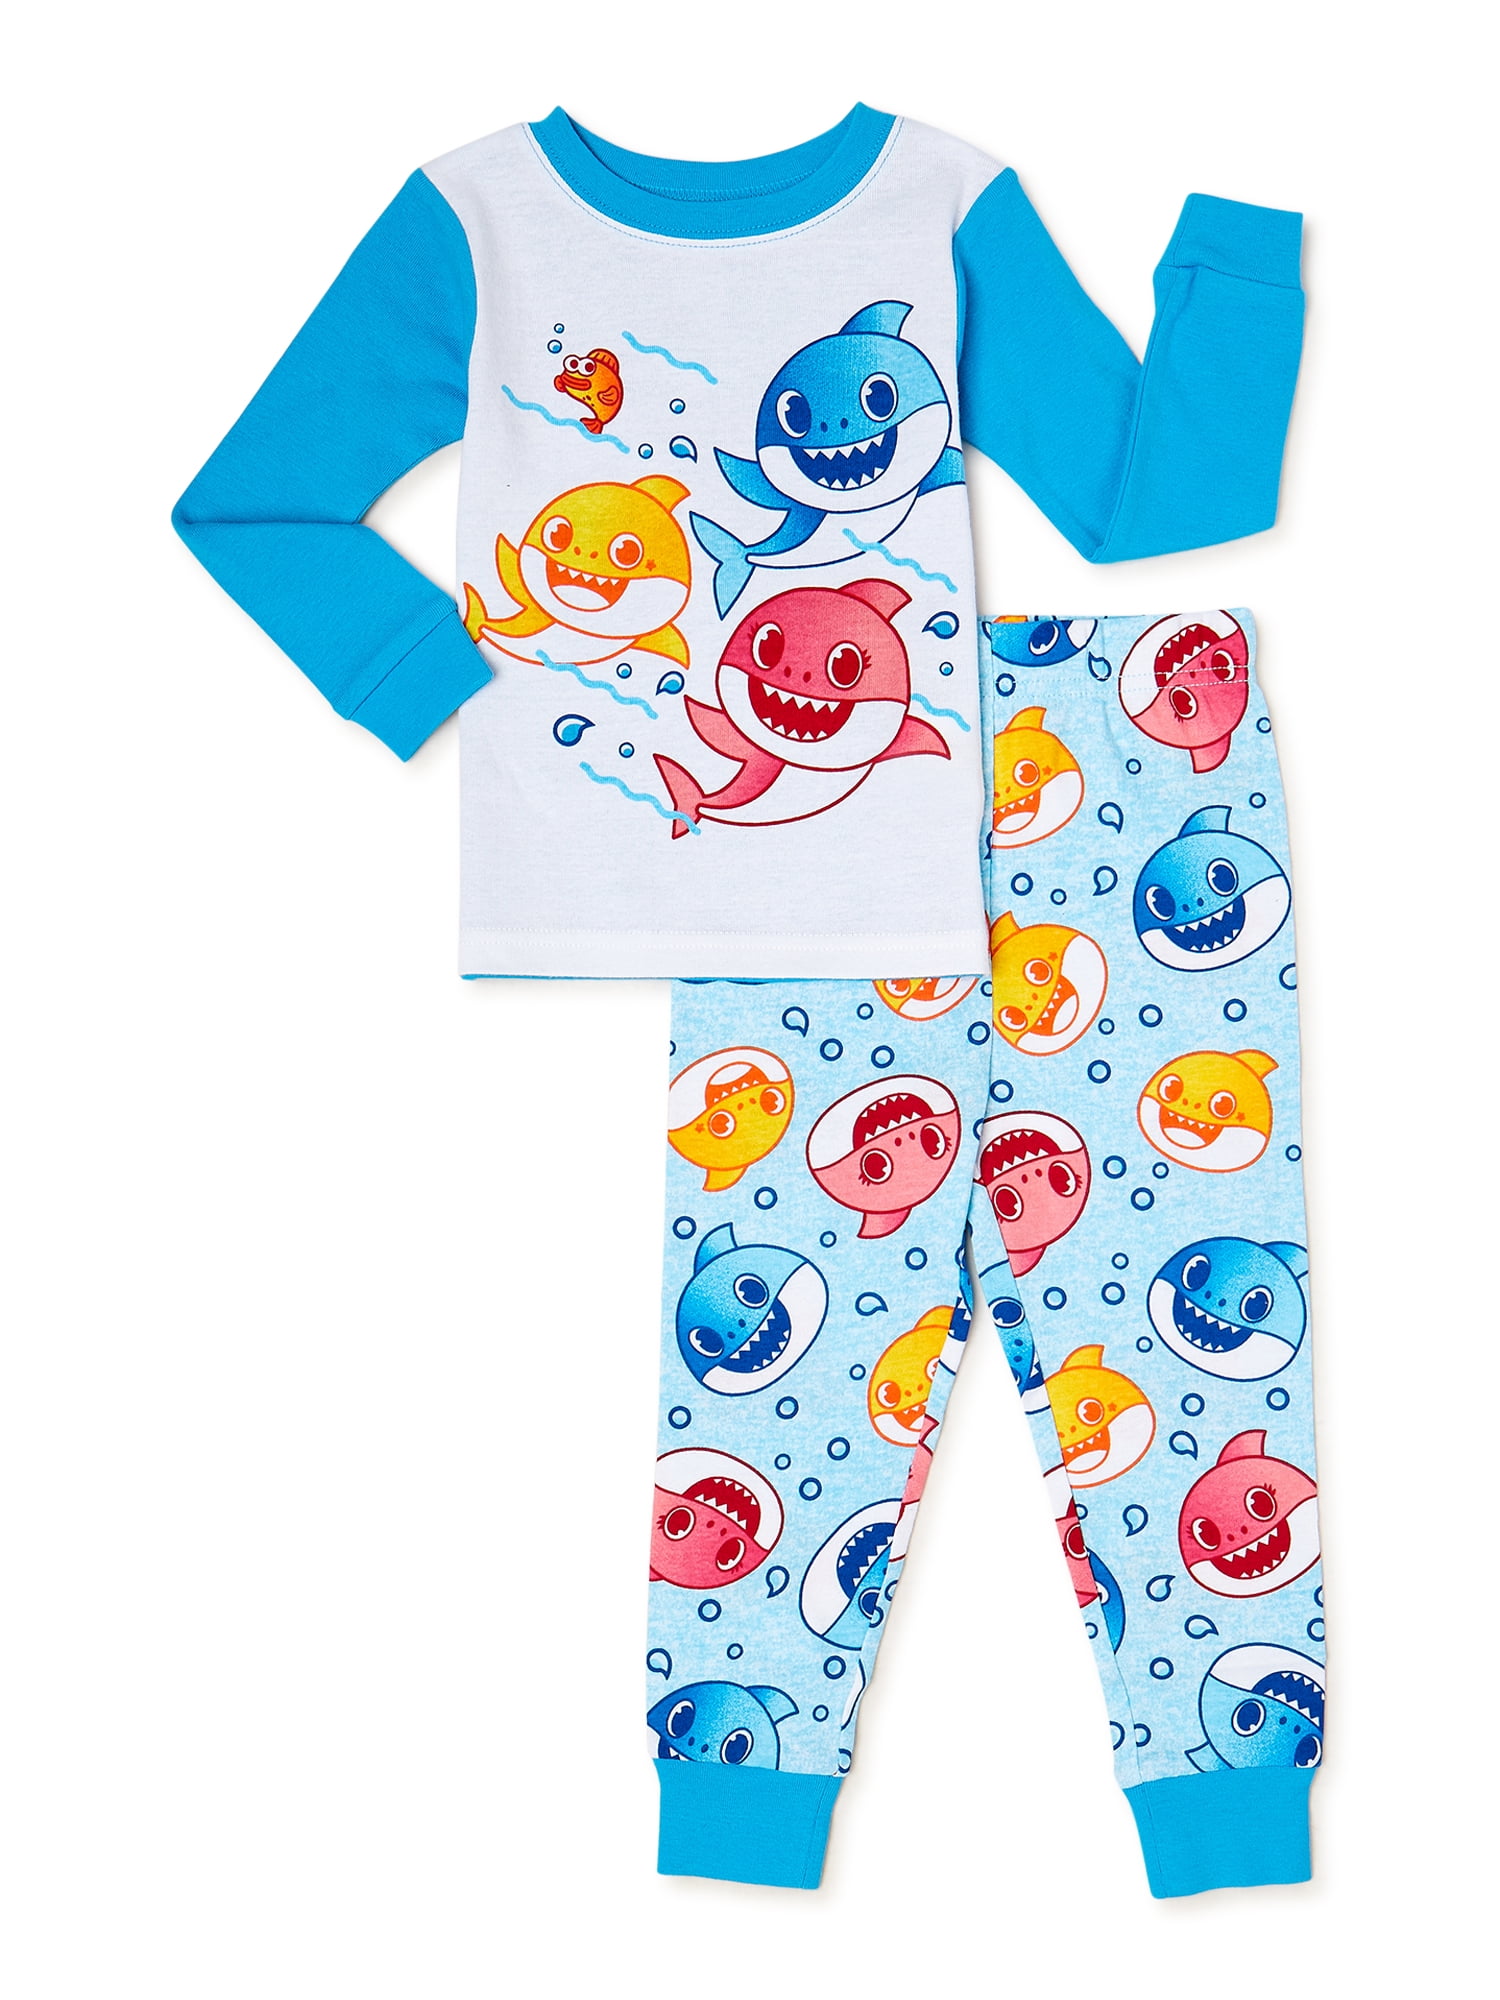 Official Boys Paddington Bear Pyjamas Kids Character Pjs Nightwear 18-24M-5 Yrs 